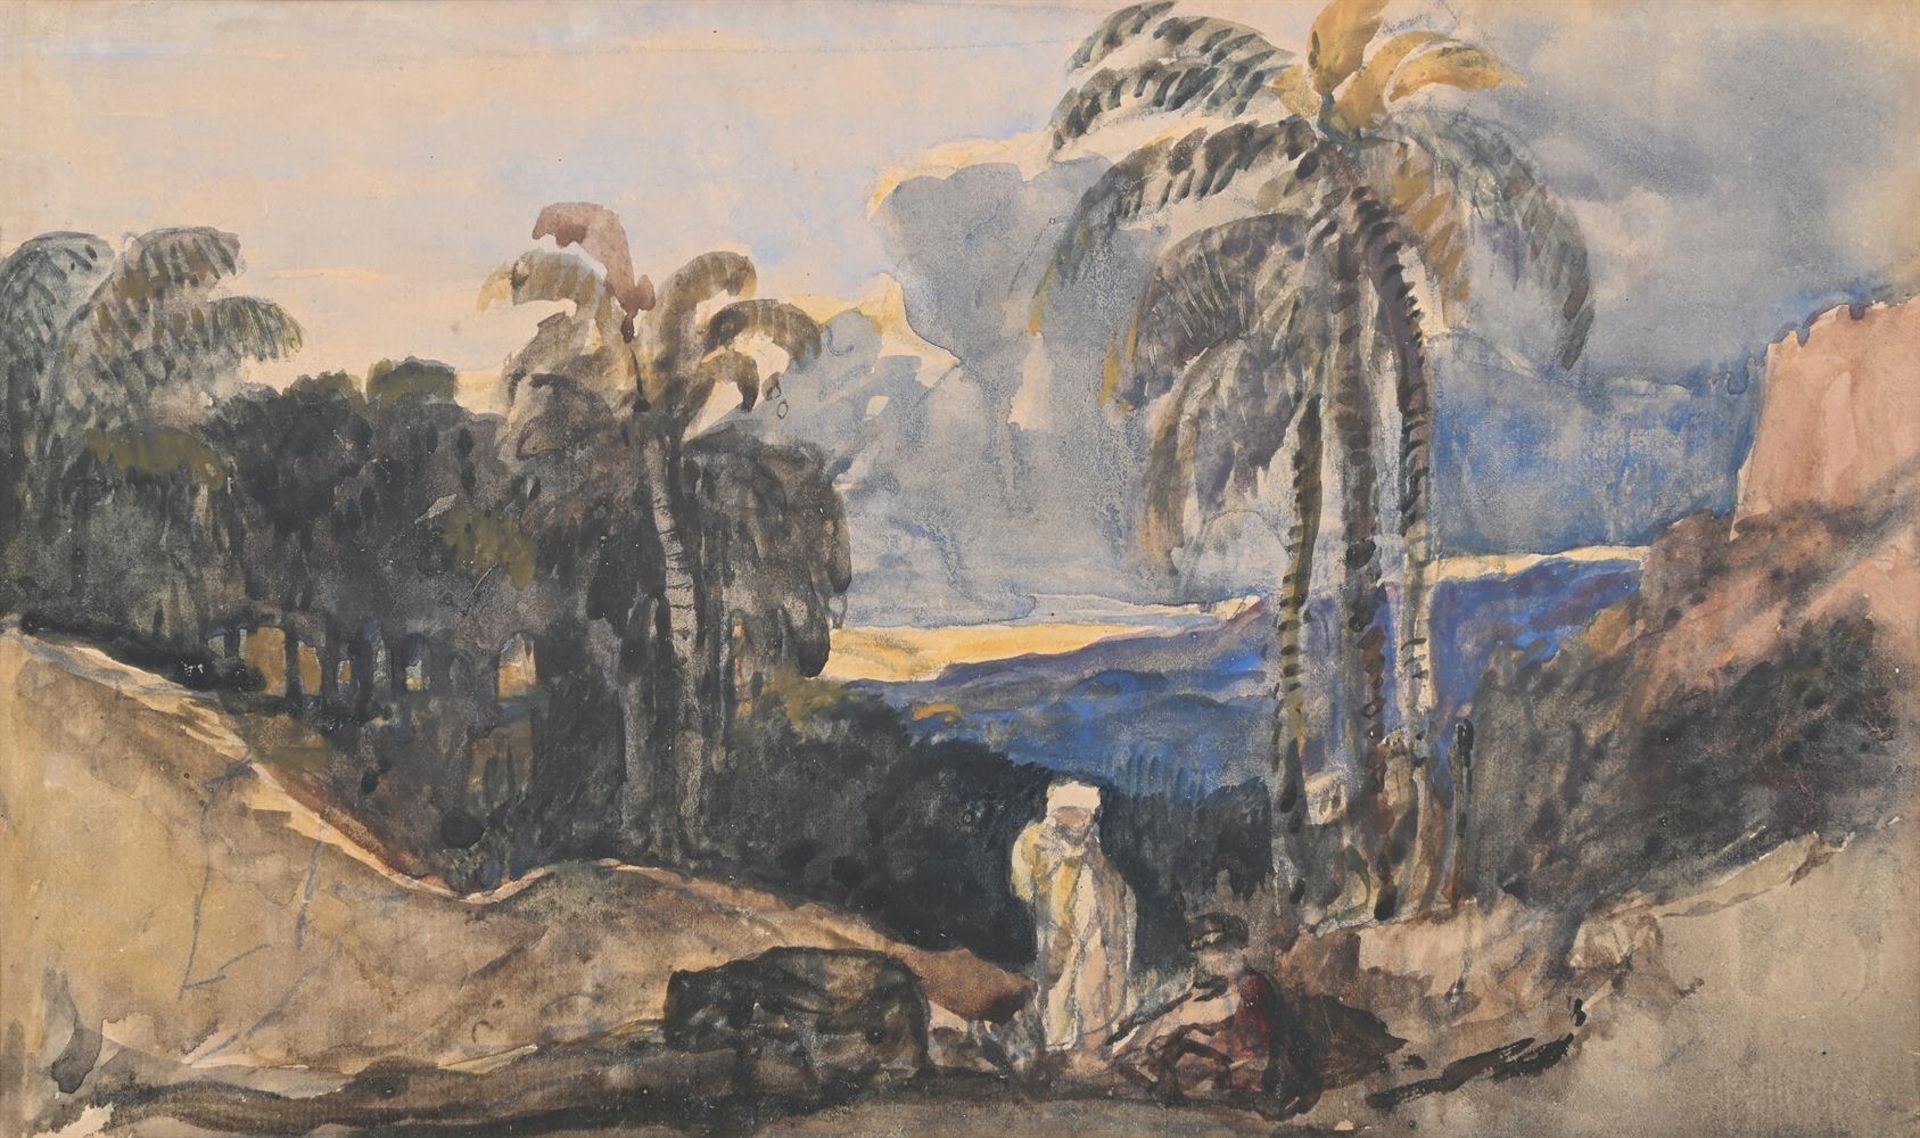 WILLIAM JAMES MÜLLER (BRITISH 1812-1845), TWILIGHT, EGYPT